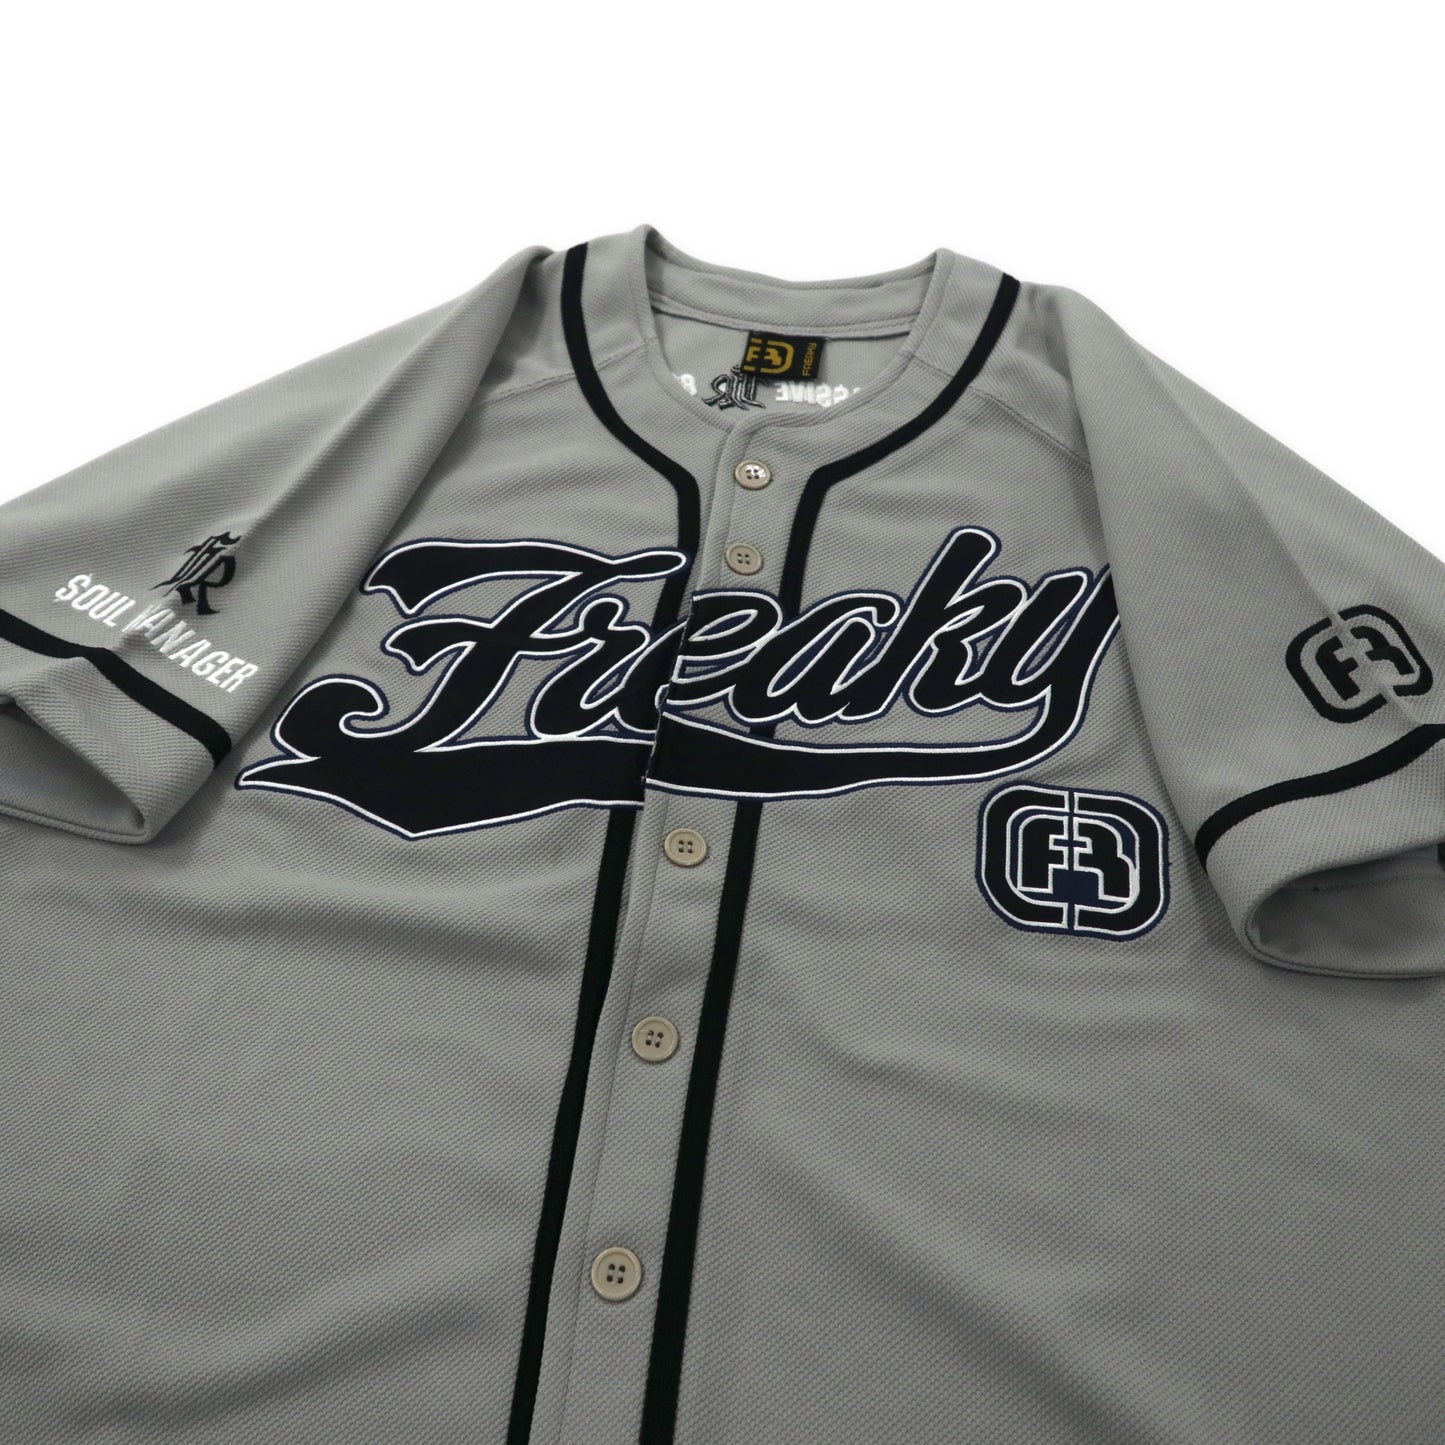 FREAKY 90s Baseball Shirt XL Gray Polyester Big Size – 日本然リトテ